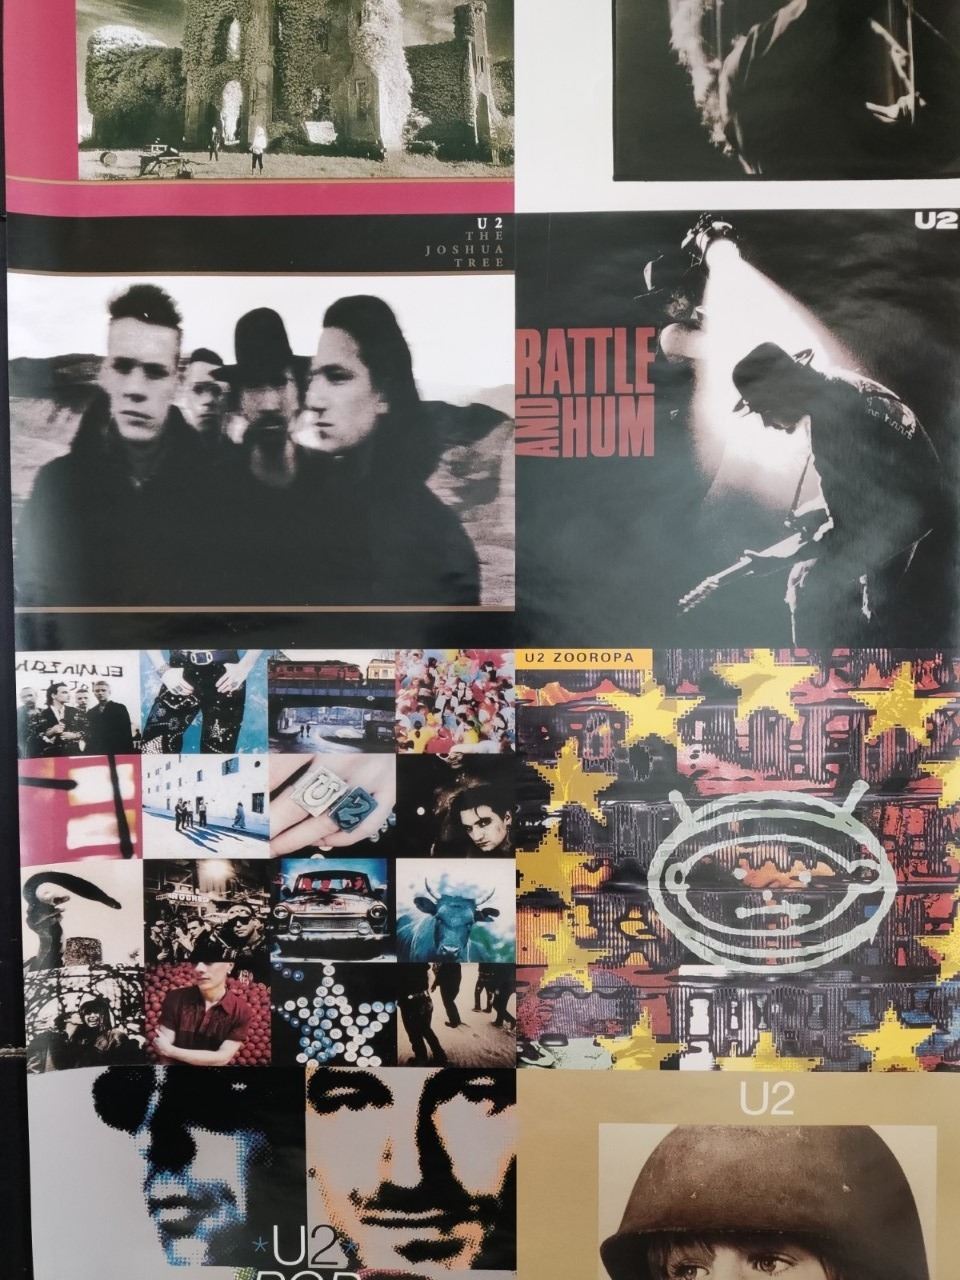 Five Finger Death Punch, U2 Album covers door poster (36x24 inches), - Image 4 of 5